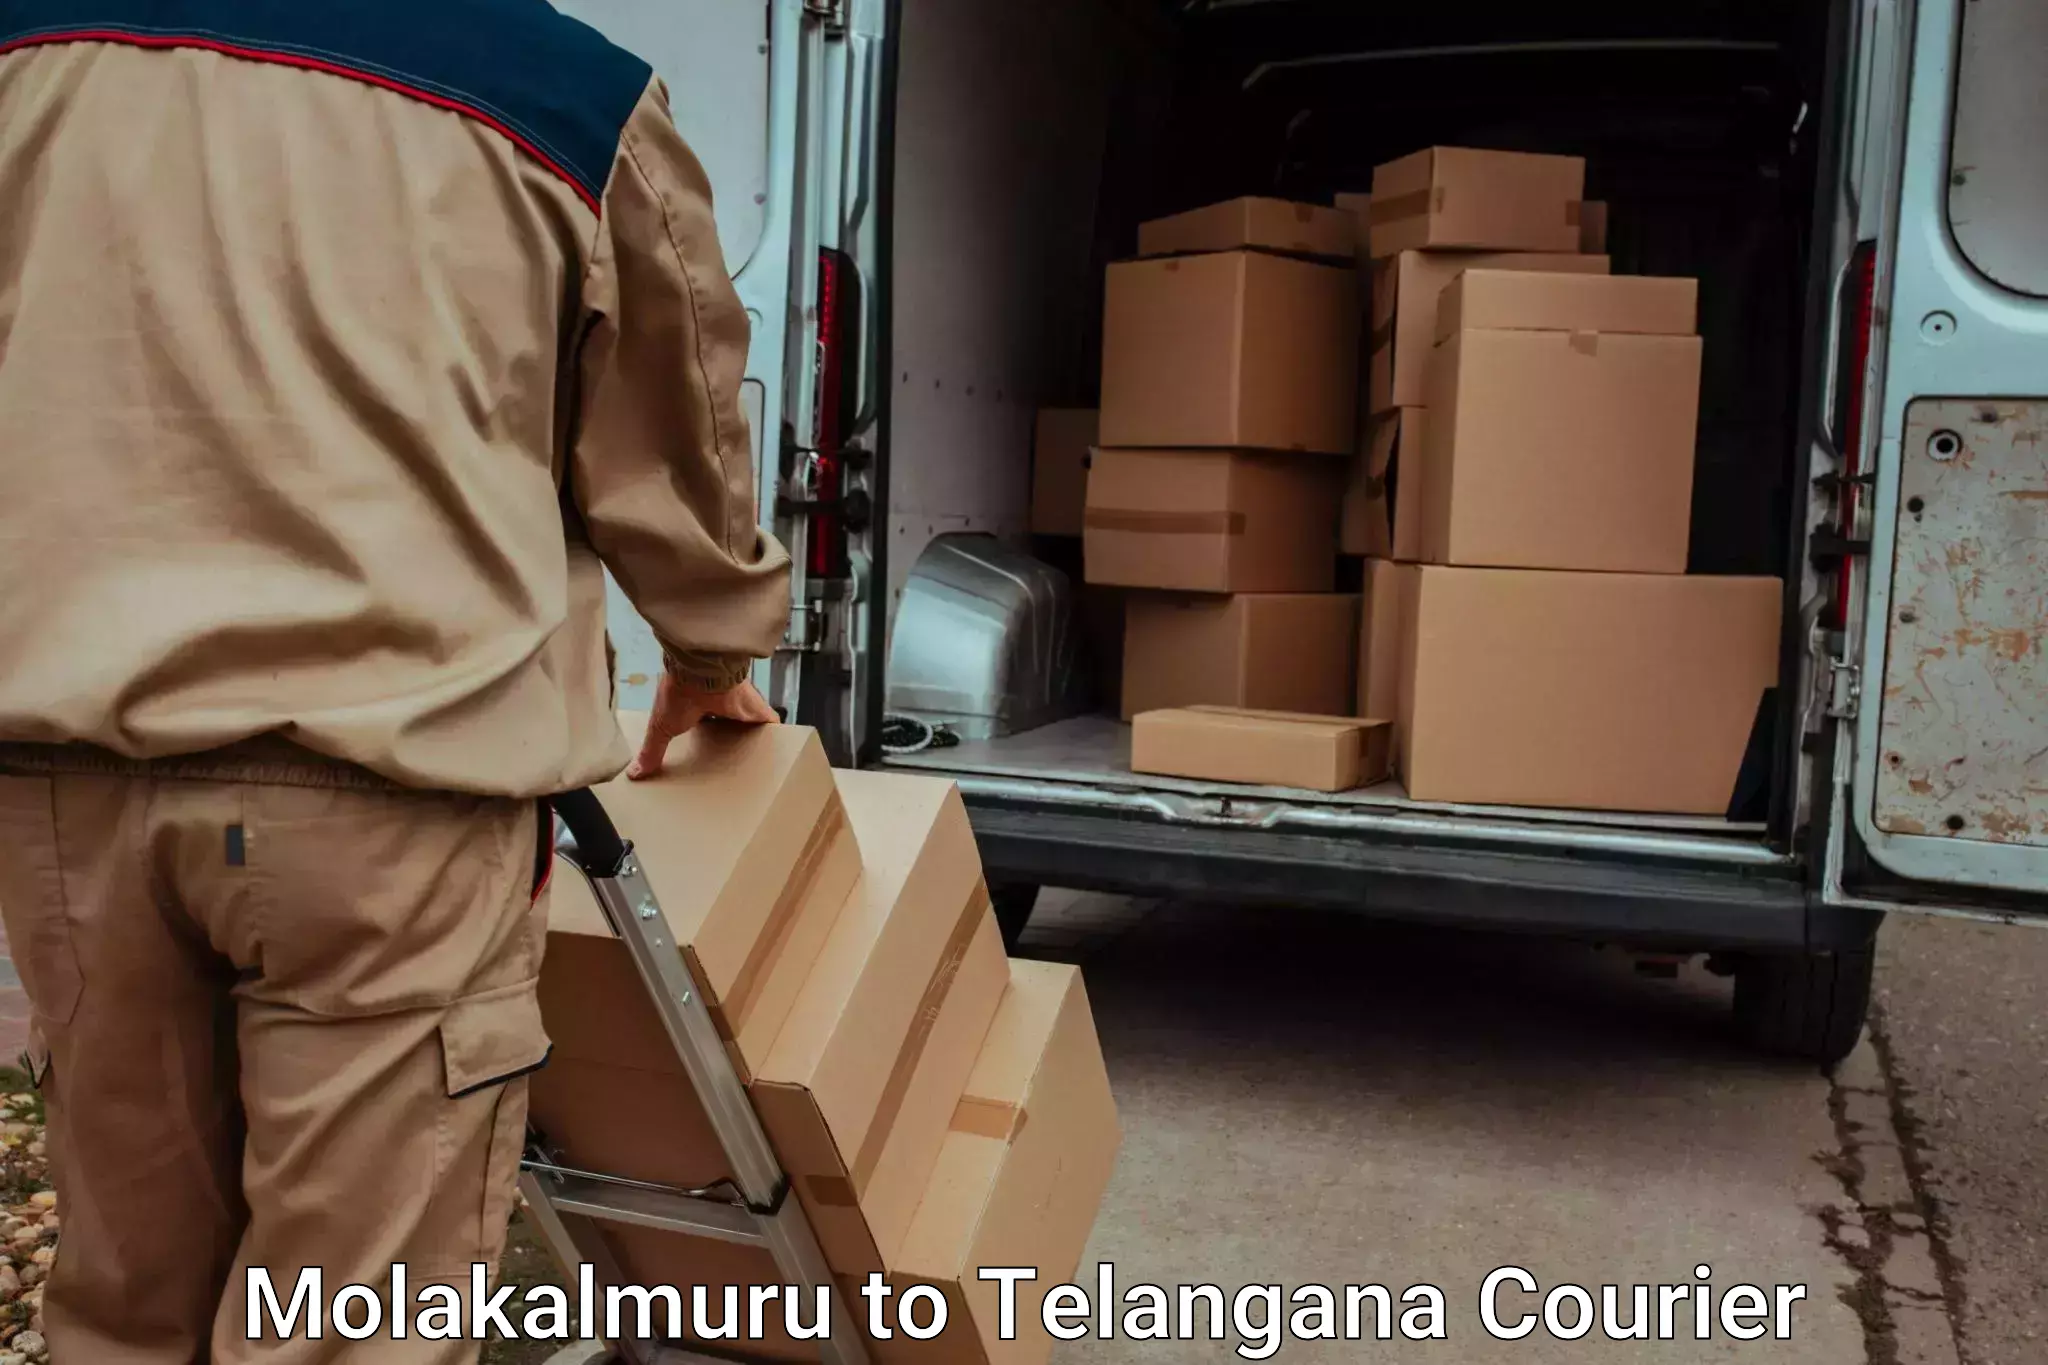 Same day luggage service Molakalmuru to Kusumanchi